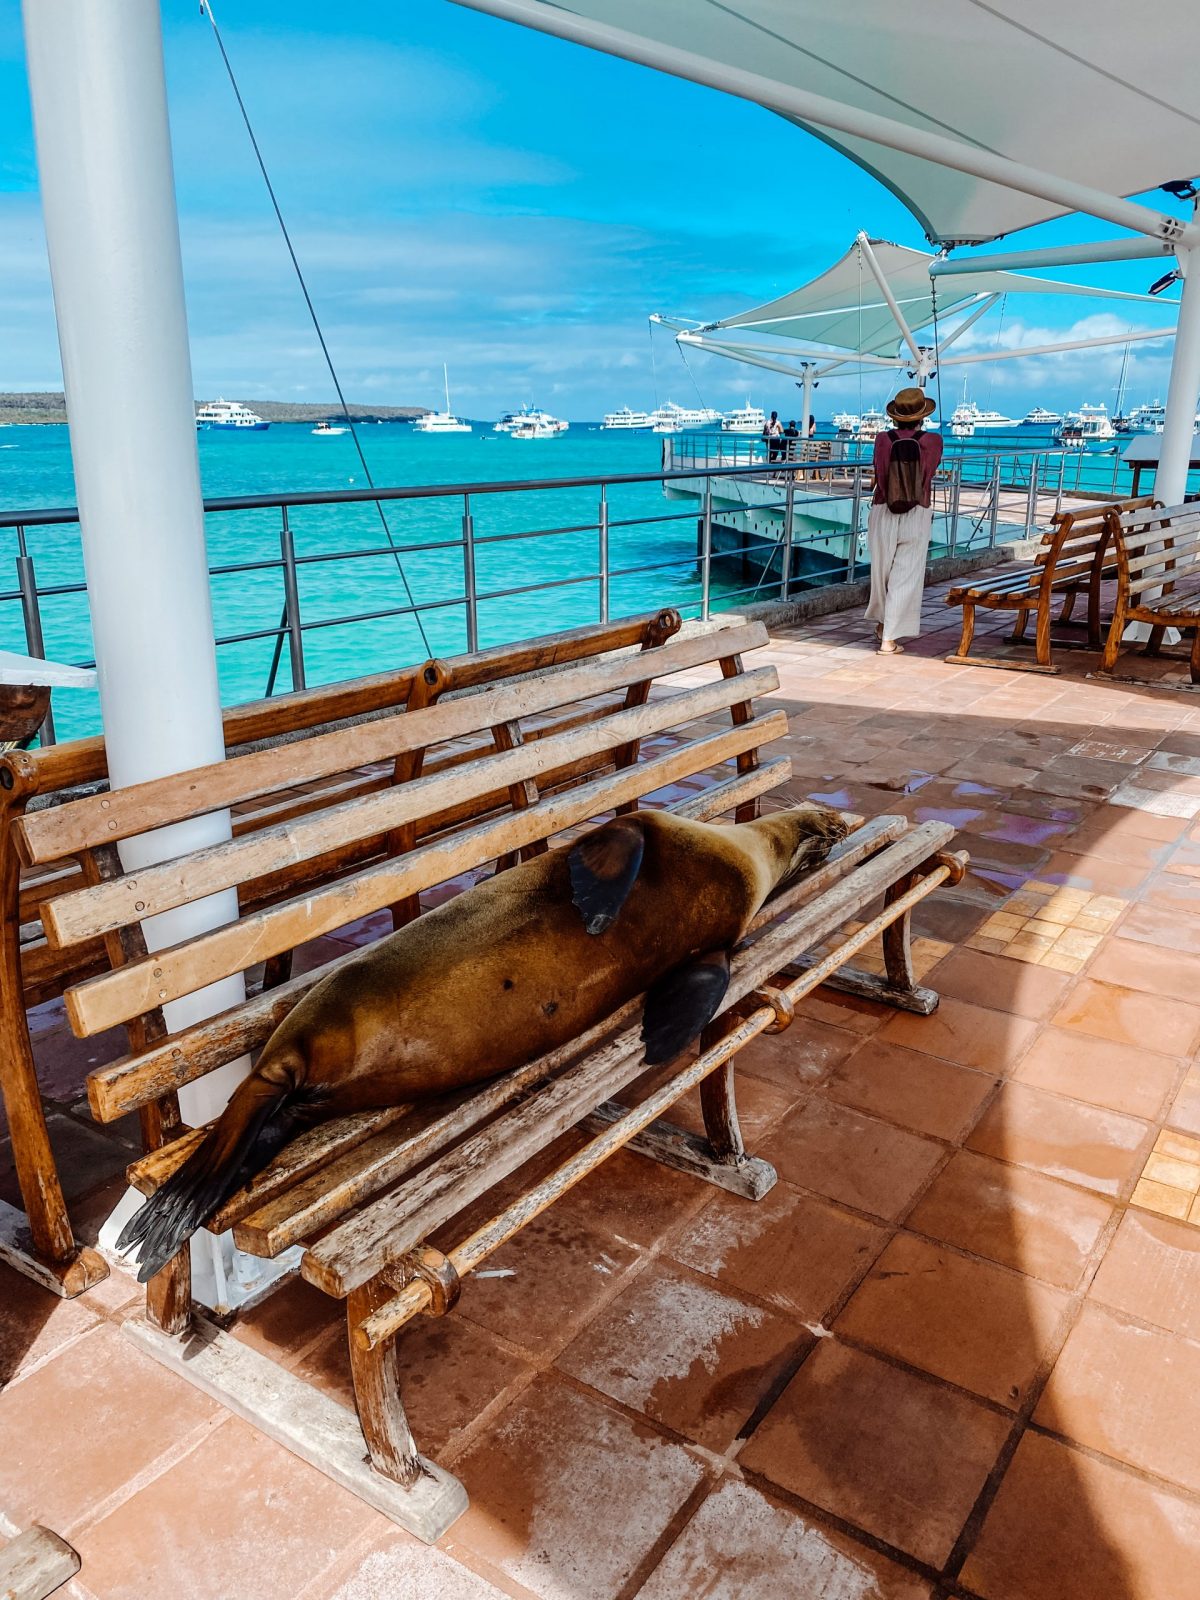 Sea lion sleeping on the bench, Galapagos Islands